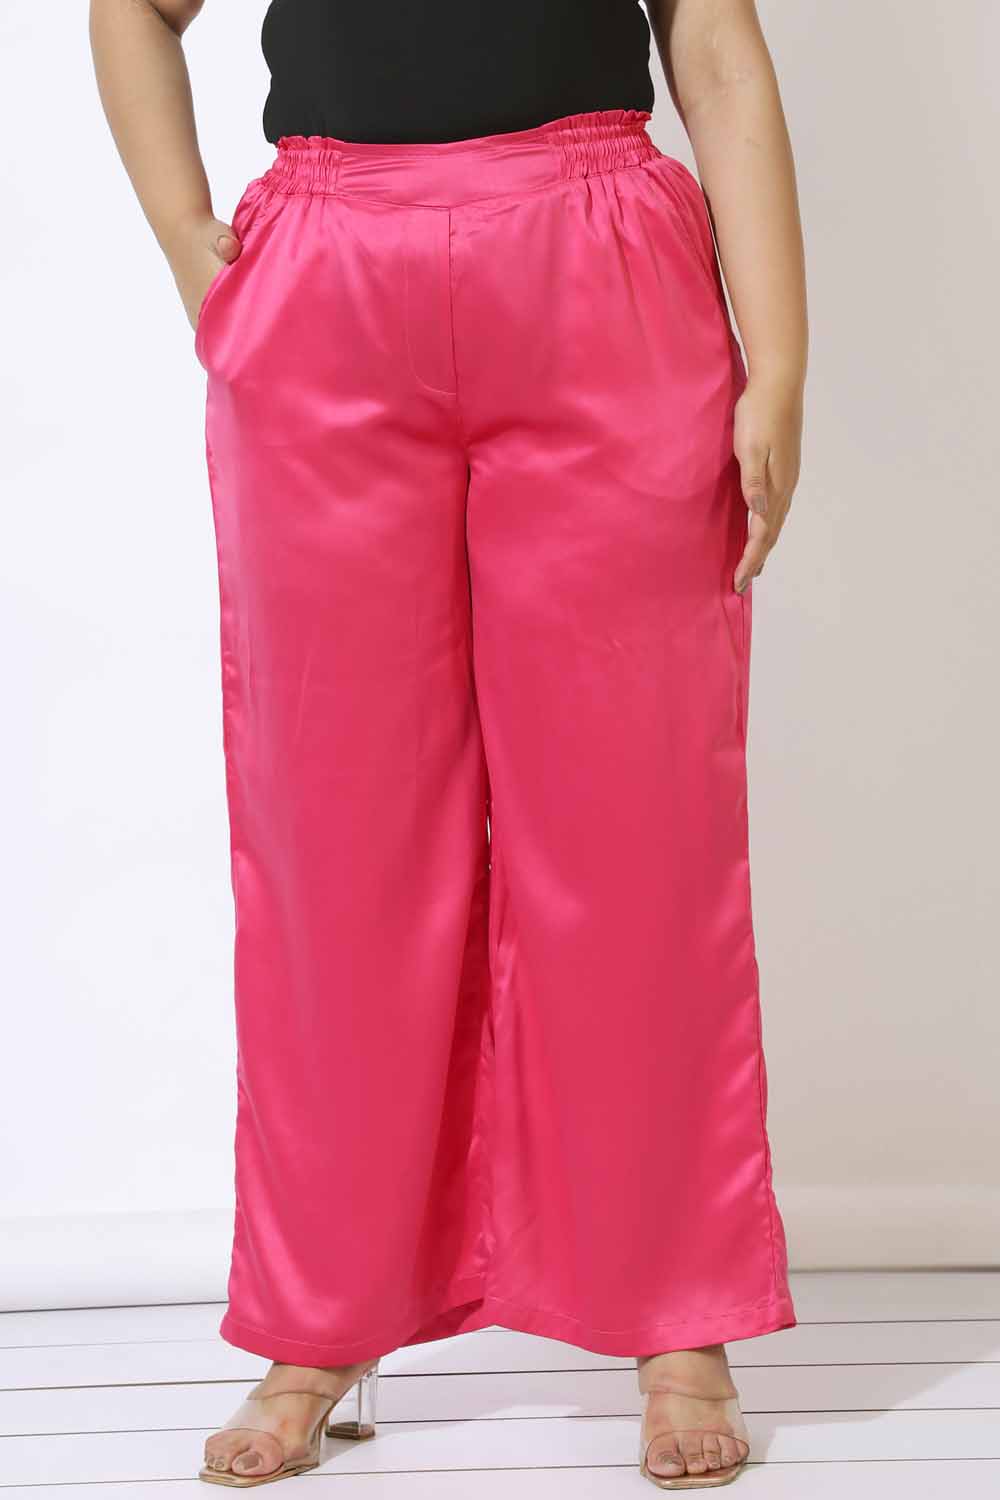 Plus Size Plus Size Pink Satin High Waist Pants